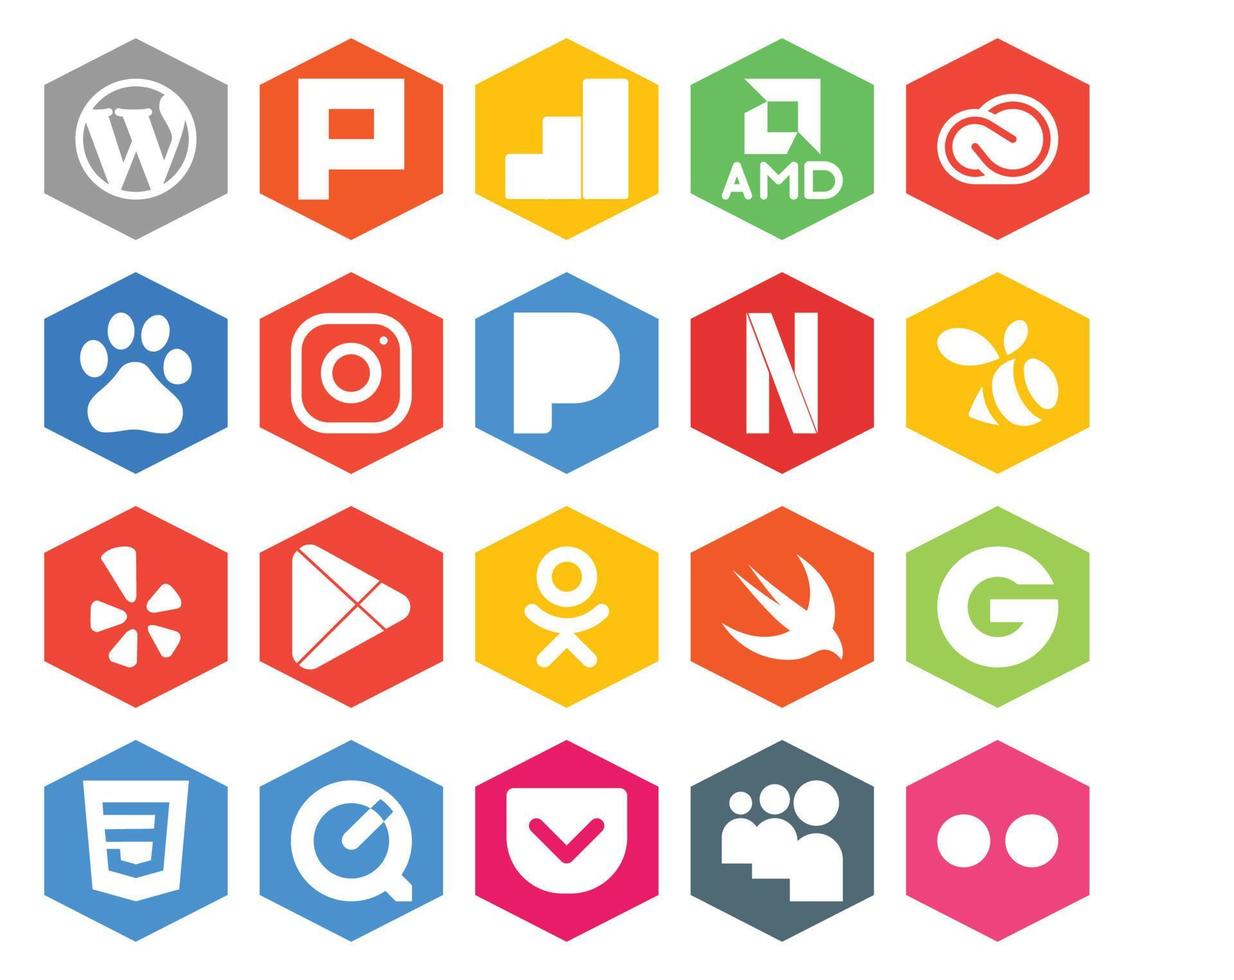 20 Social Media Icon Pack Including swift apps baidu google play swarm vector